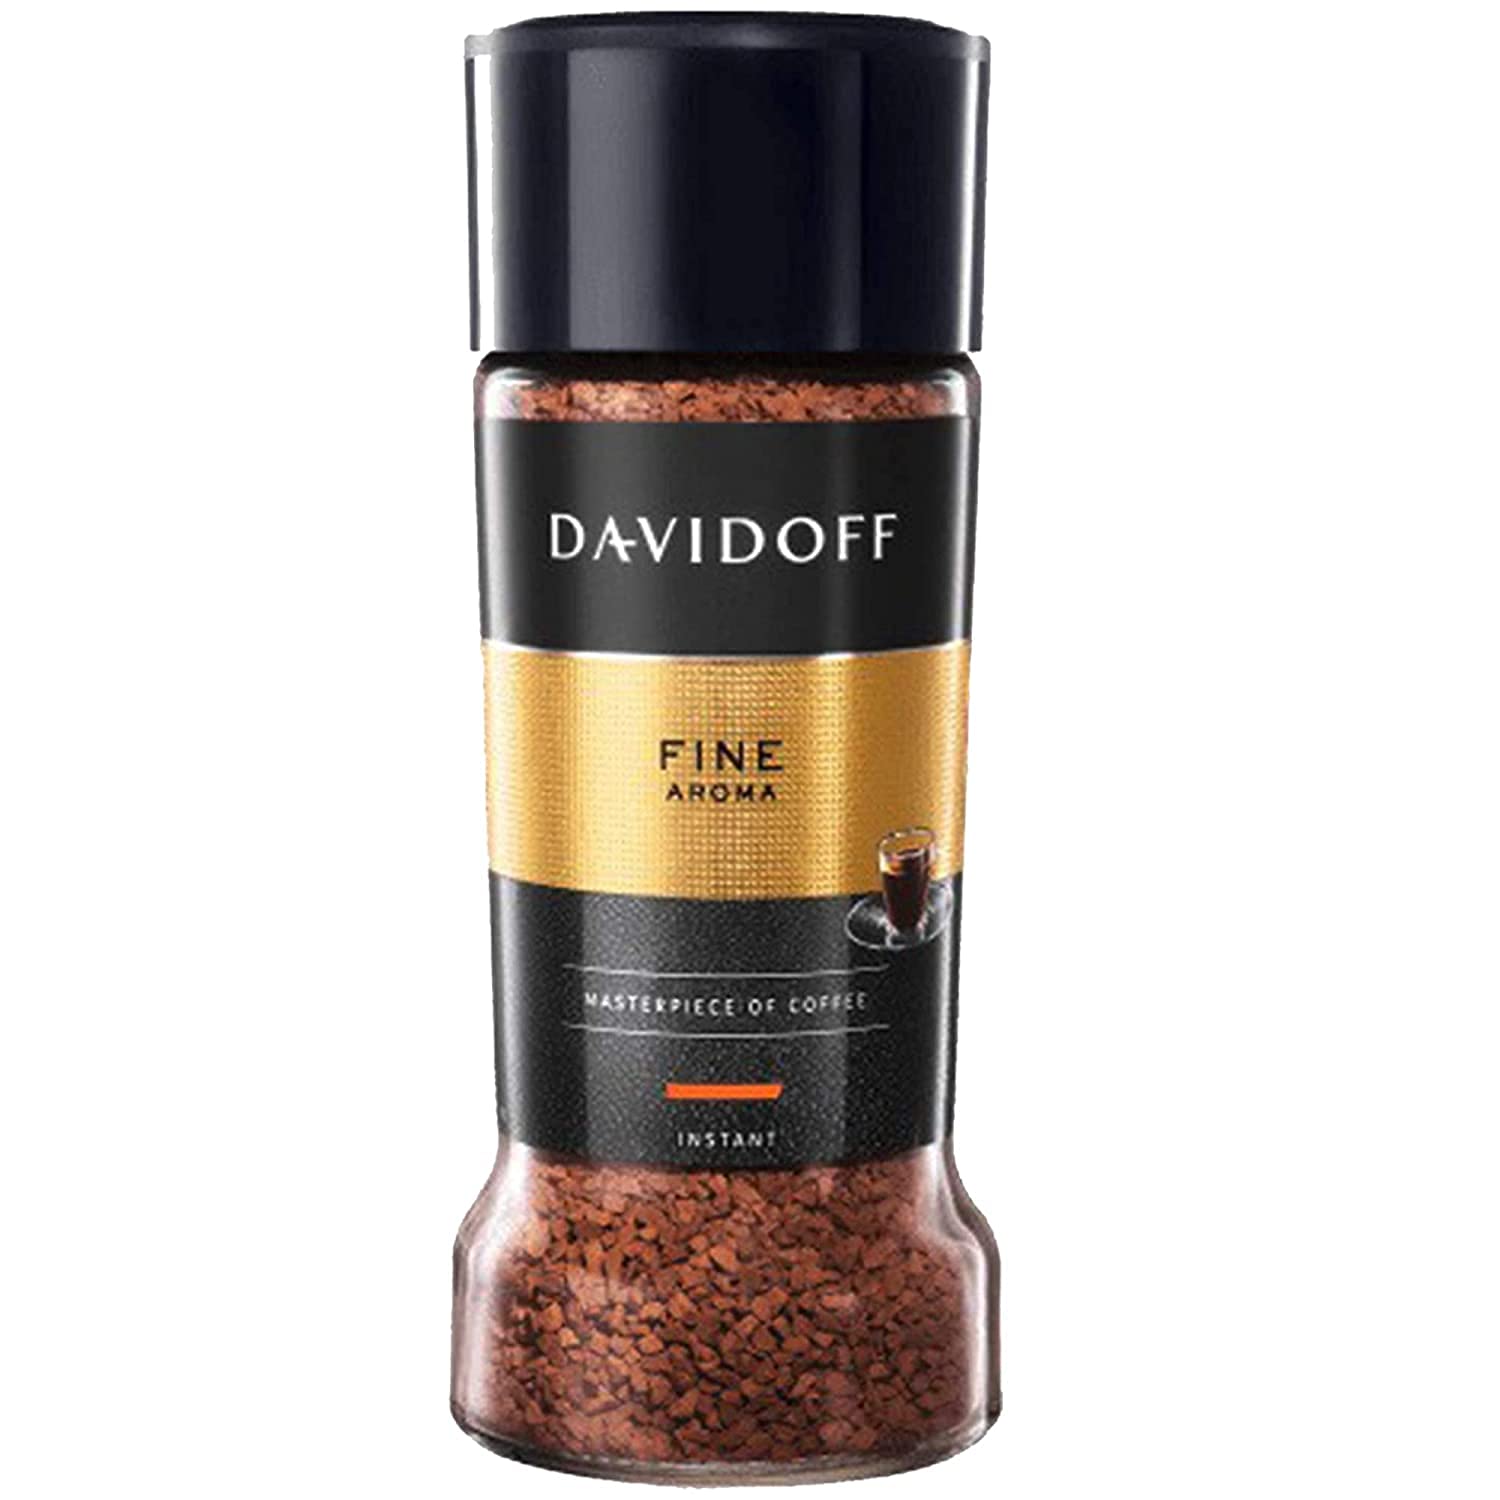  Buy Davidoff Fine Aroma Instant Ground Coffee Jar